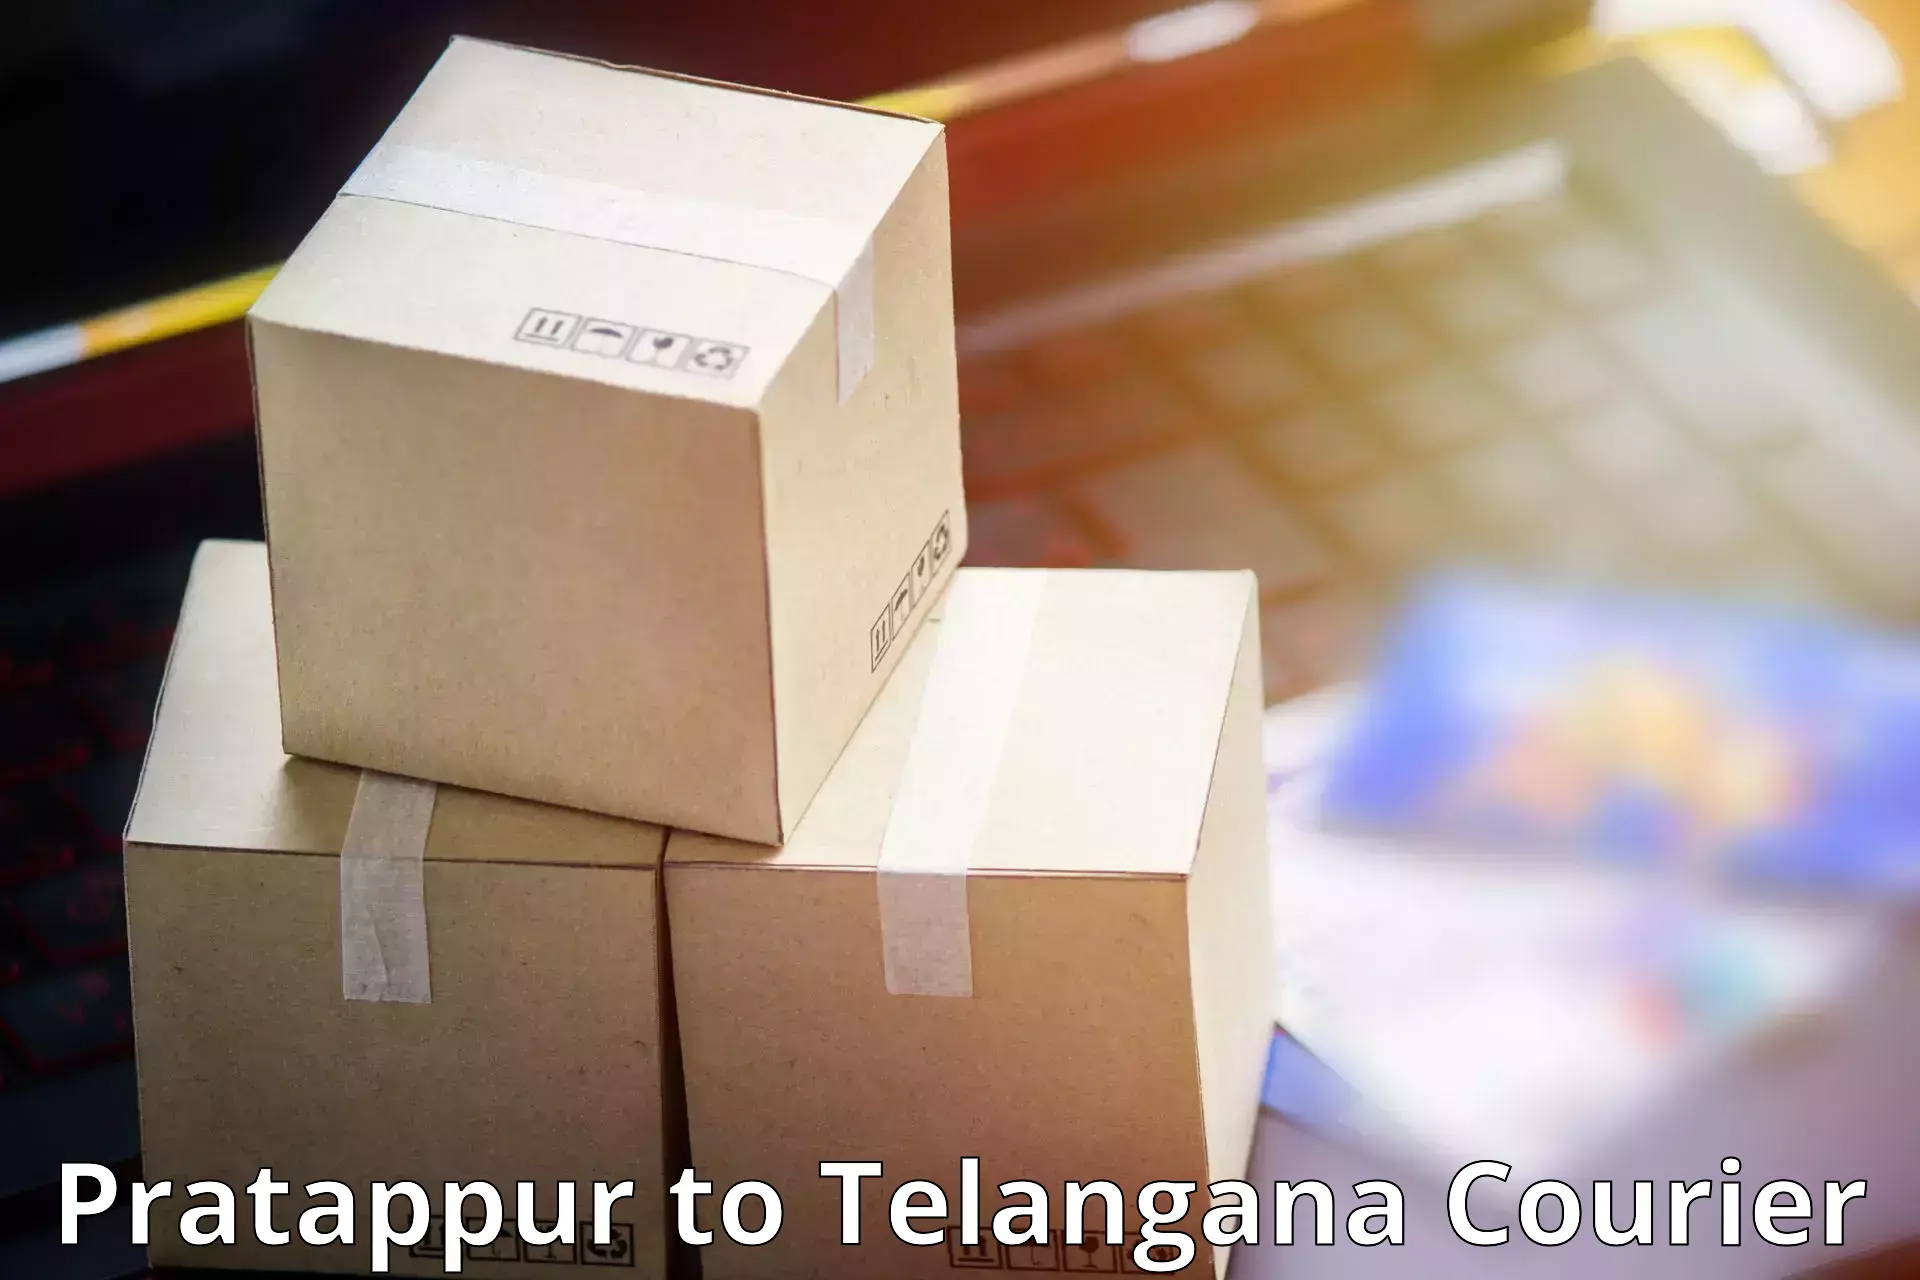 Courier service comparison Pratappur to Danthalapally